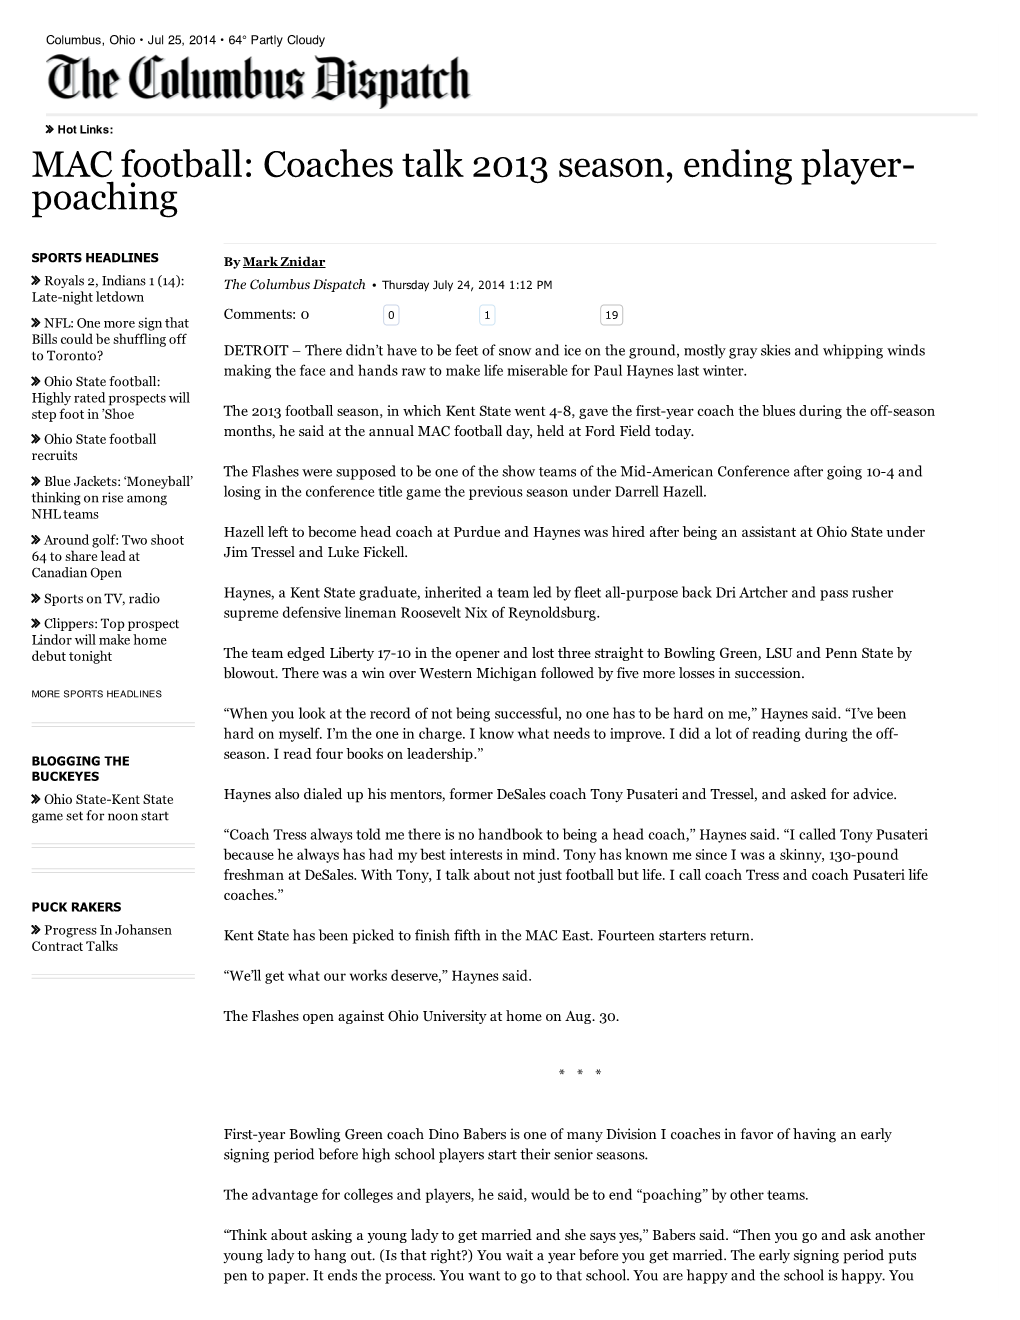 MAC Football: Coaches Talk 2013 Season, Ending Player Poaching